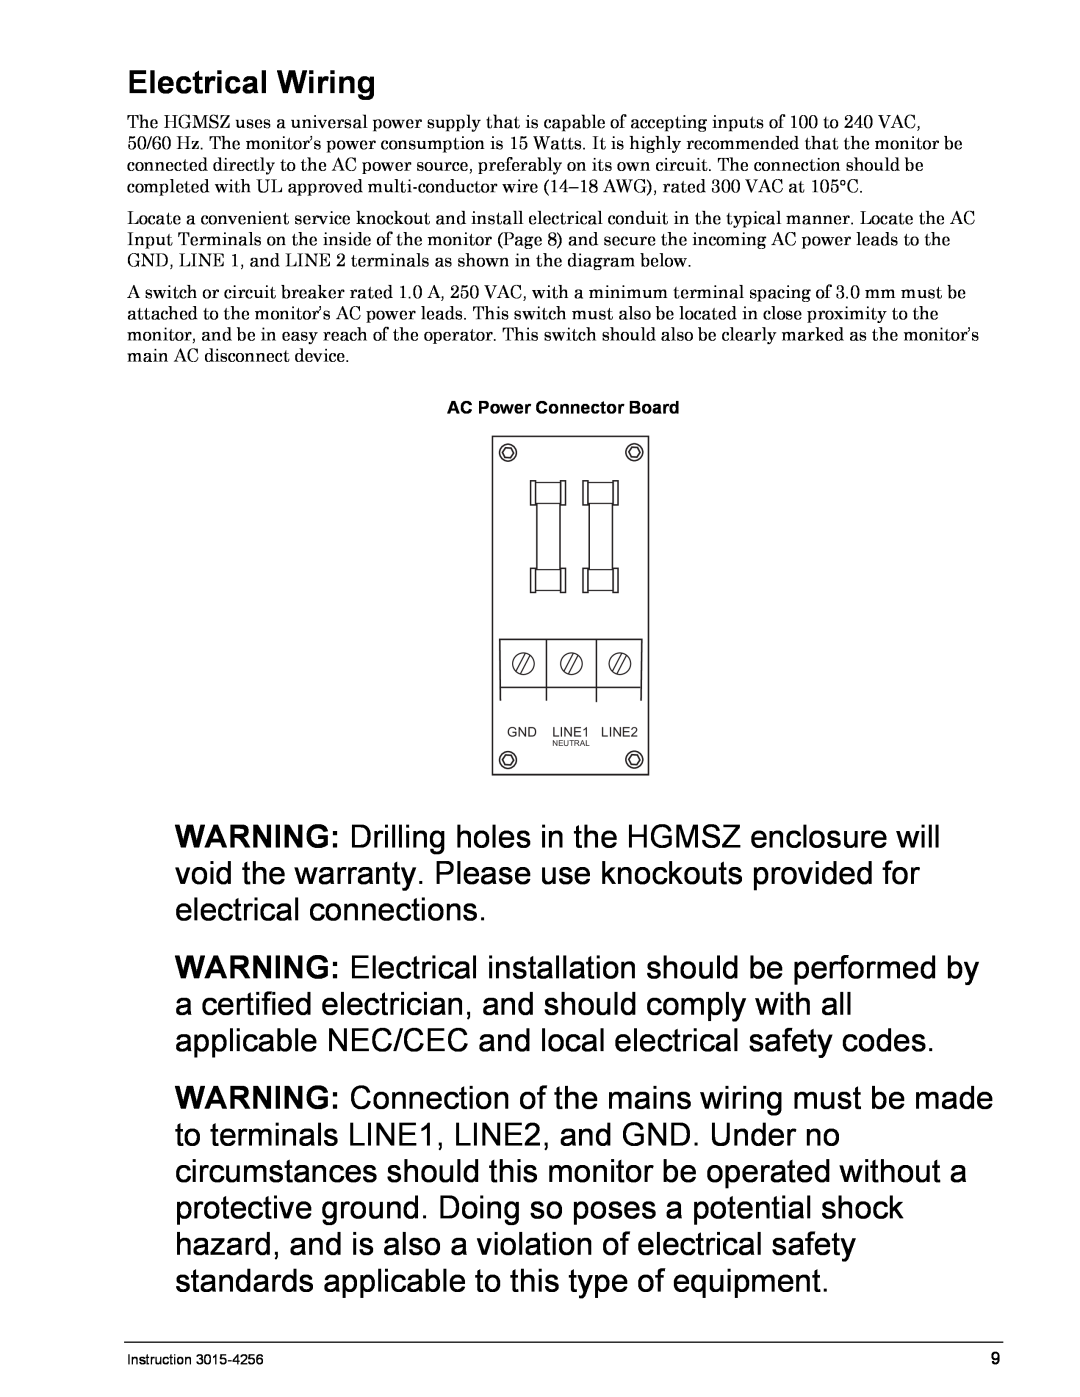 Bacharach 3015-4256 manual Electrical Wiring, AC Power Connector Board 